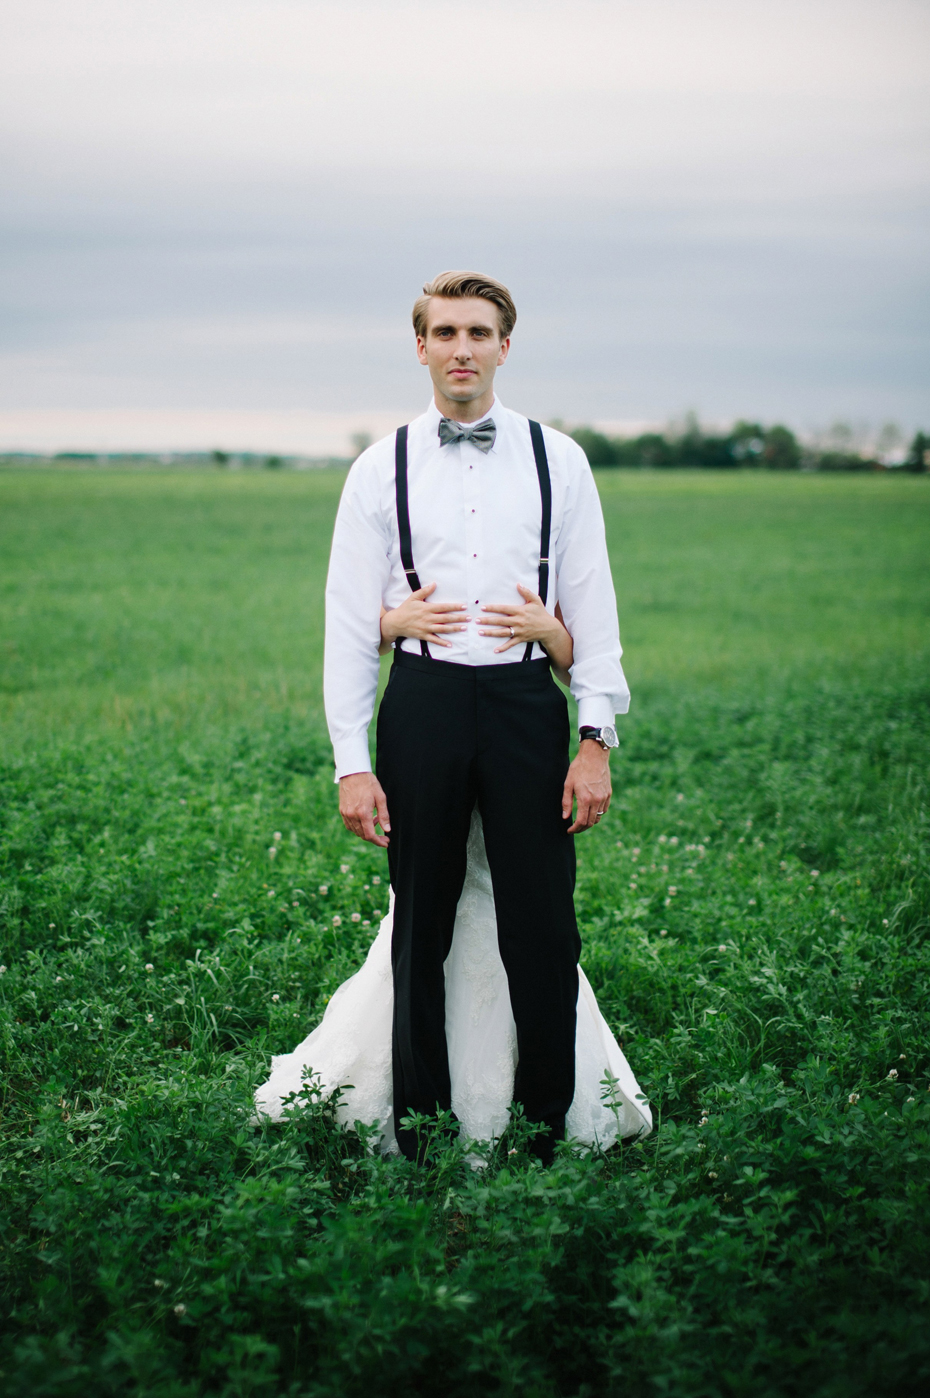 Photojournalistic Grand Rapids Michigan wedding photographer Heather Jowett presents her best photographs from 2013.